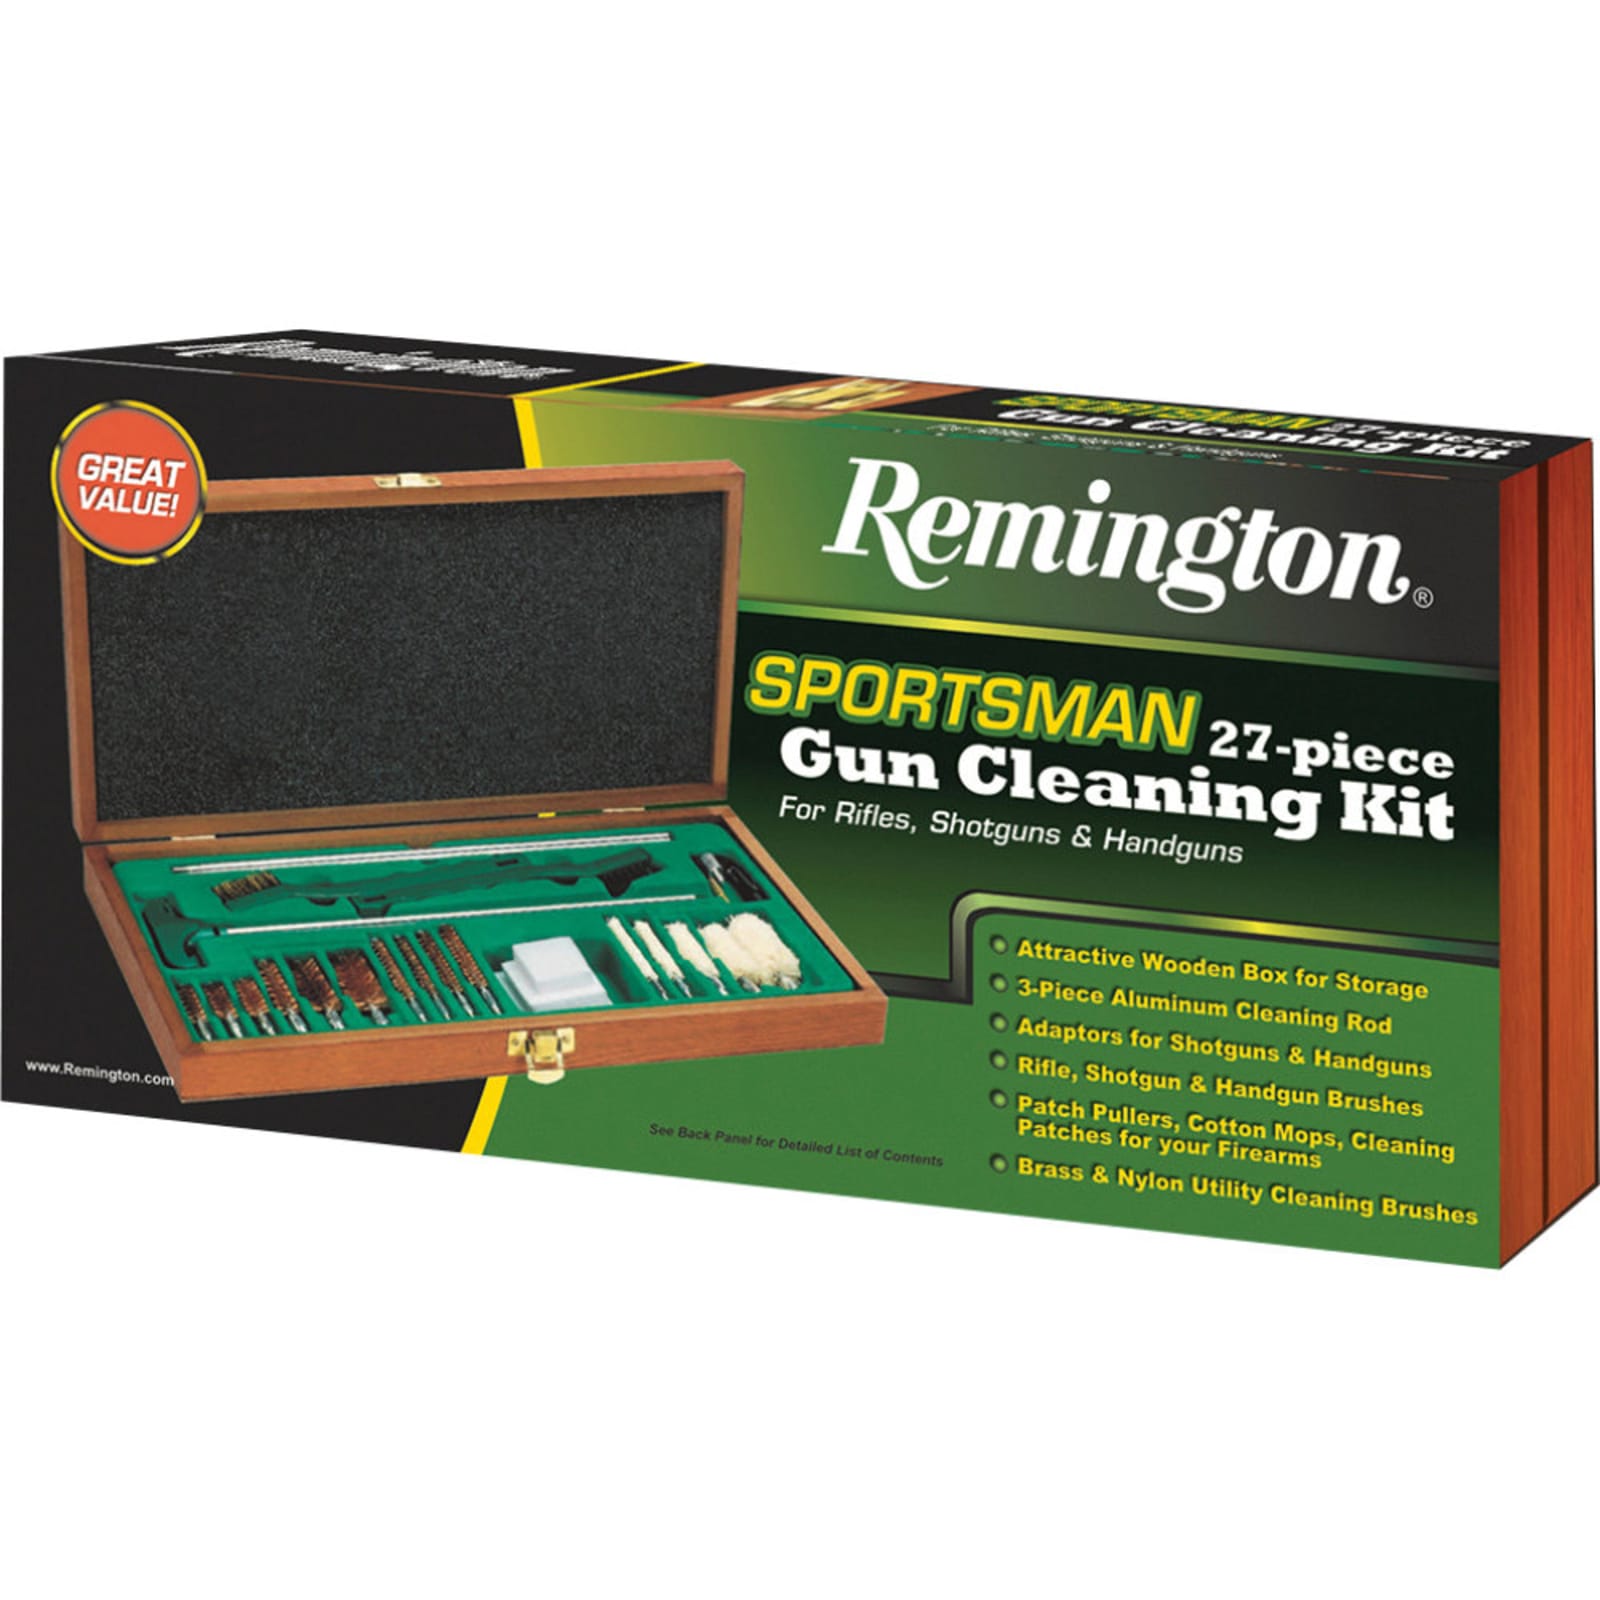 Sportsman Gun Cleaning Kit by Remington at Fleet Farm